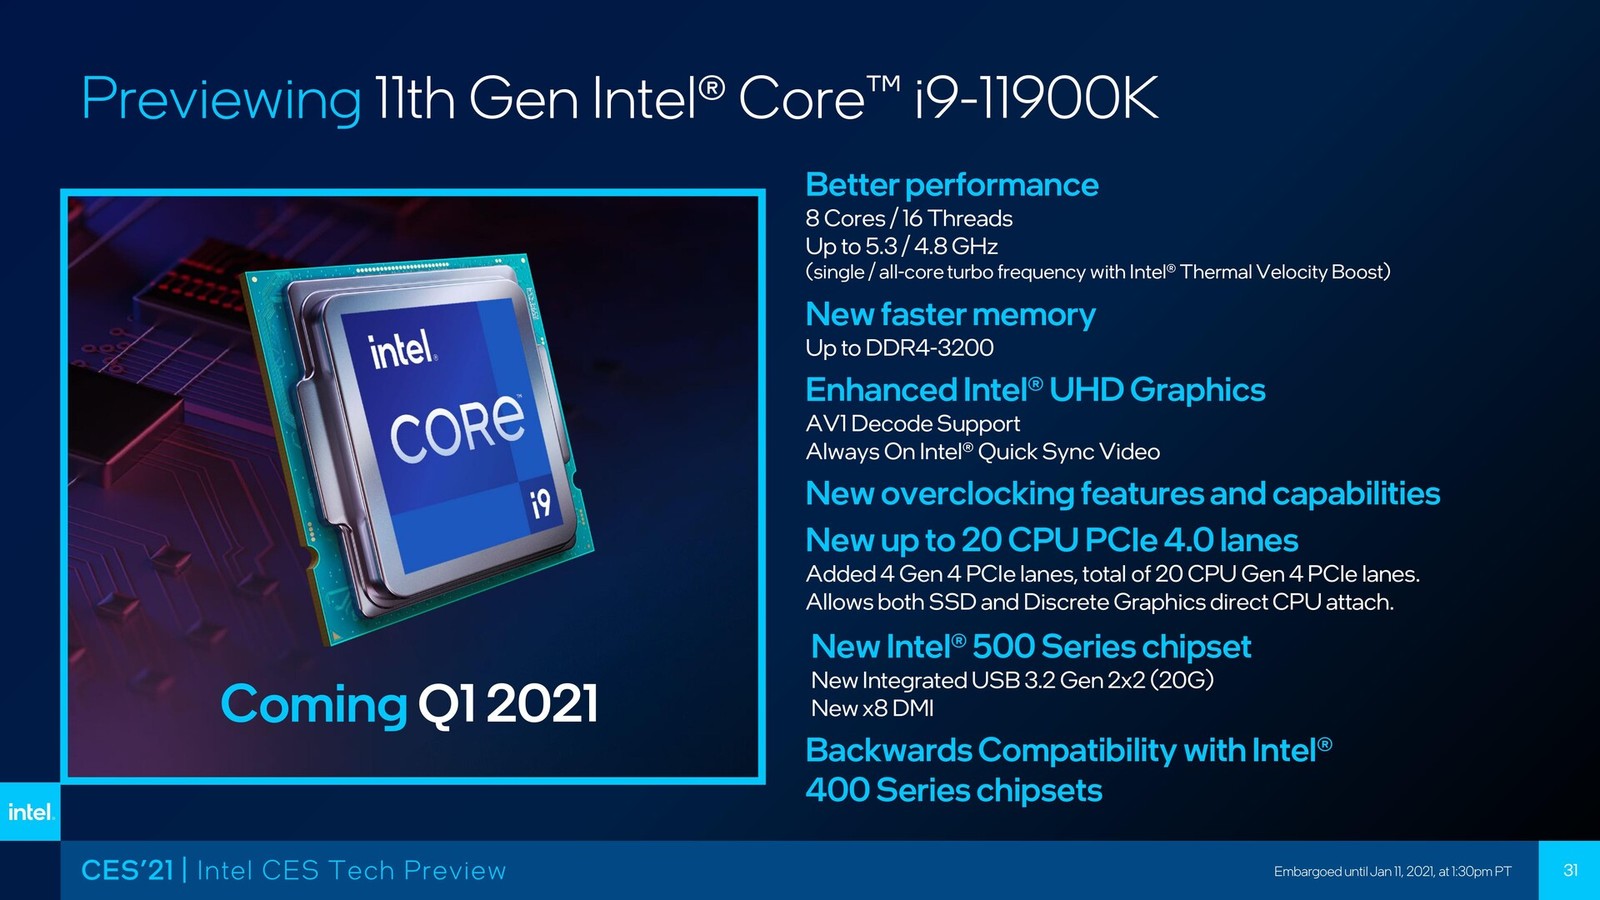 Intel Core 11